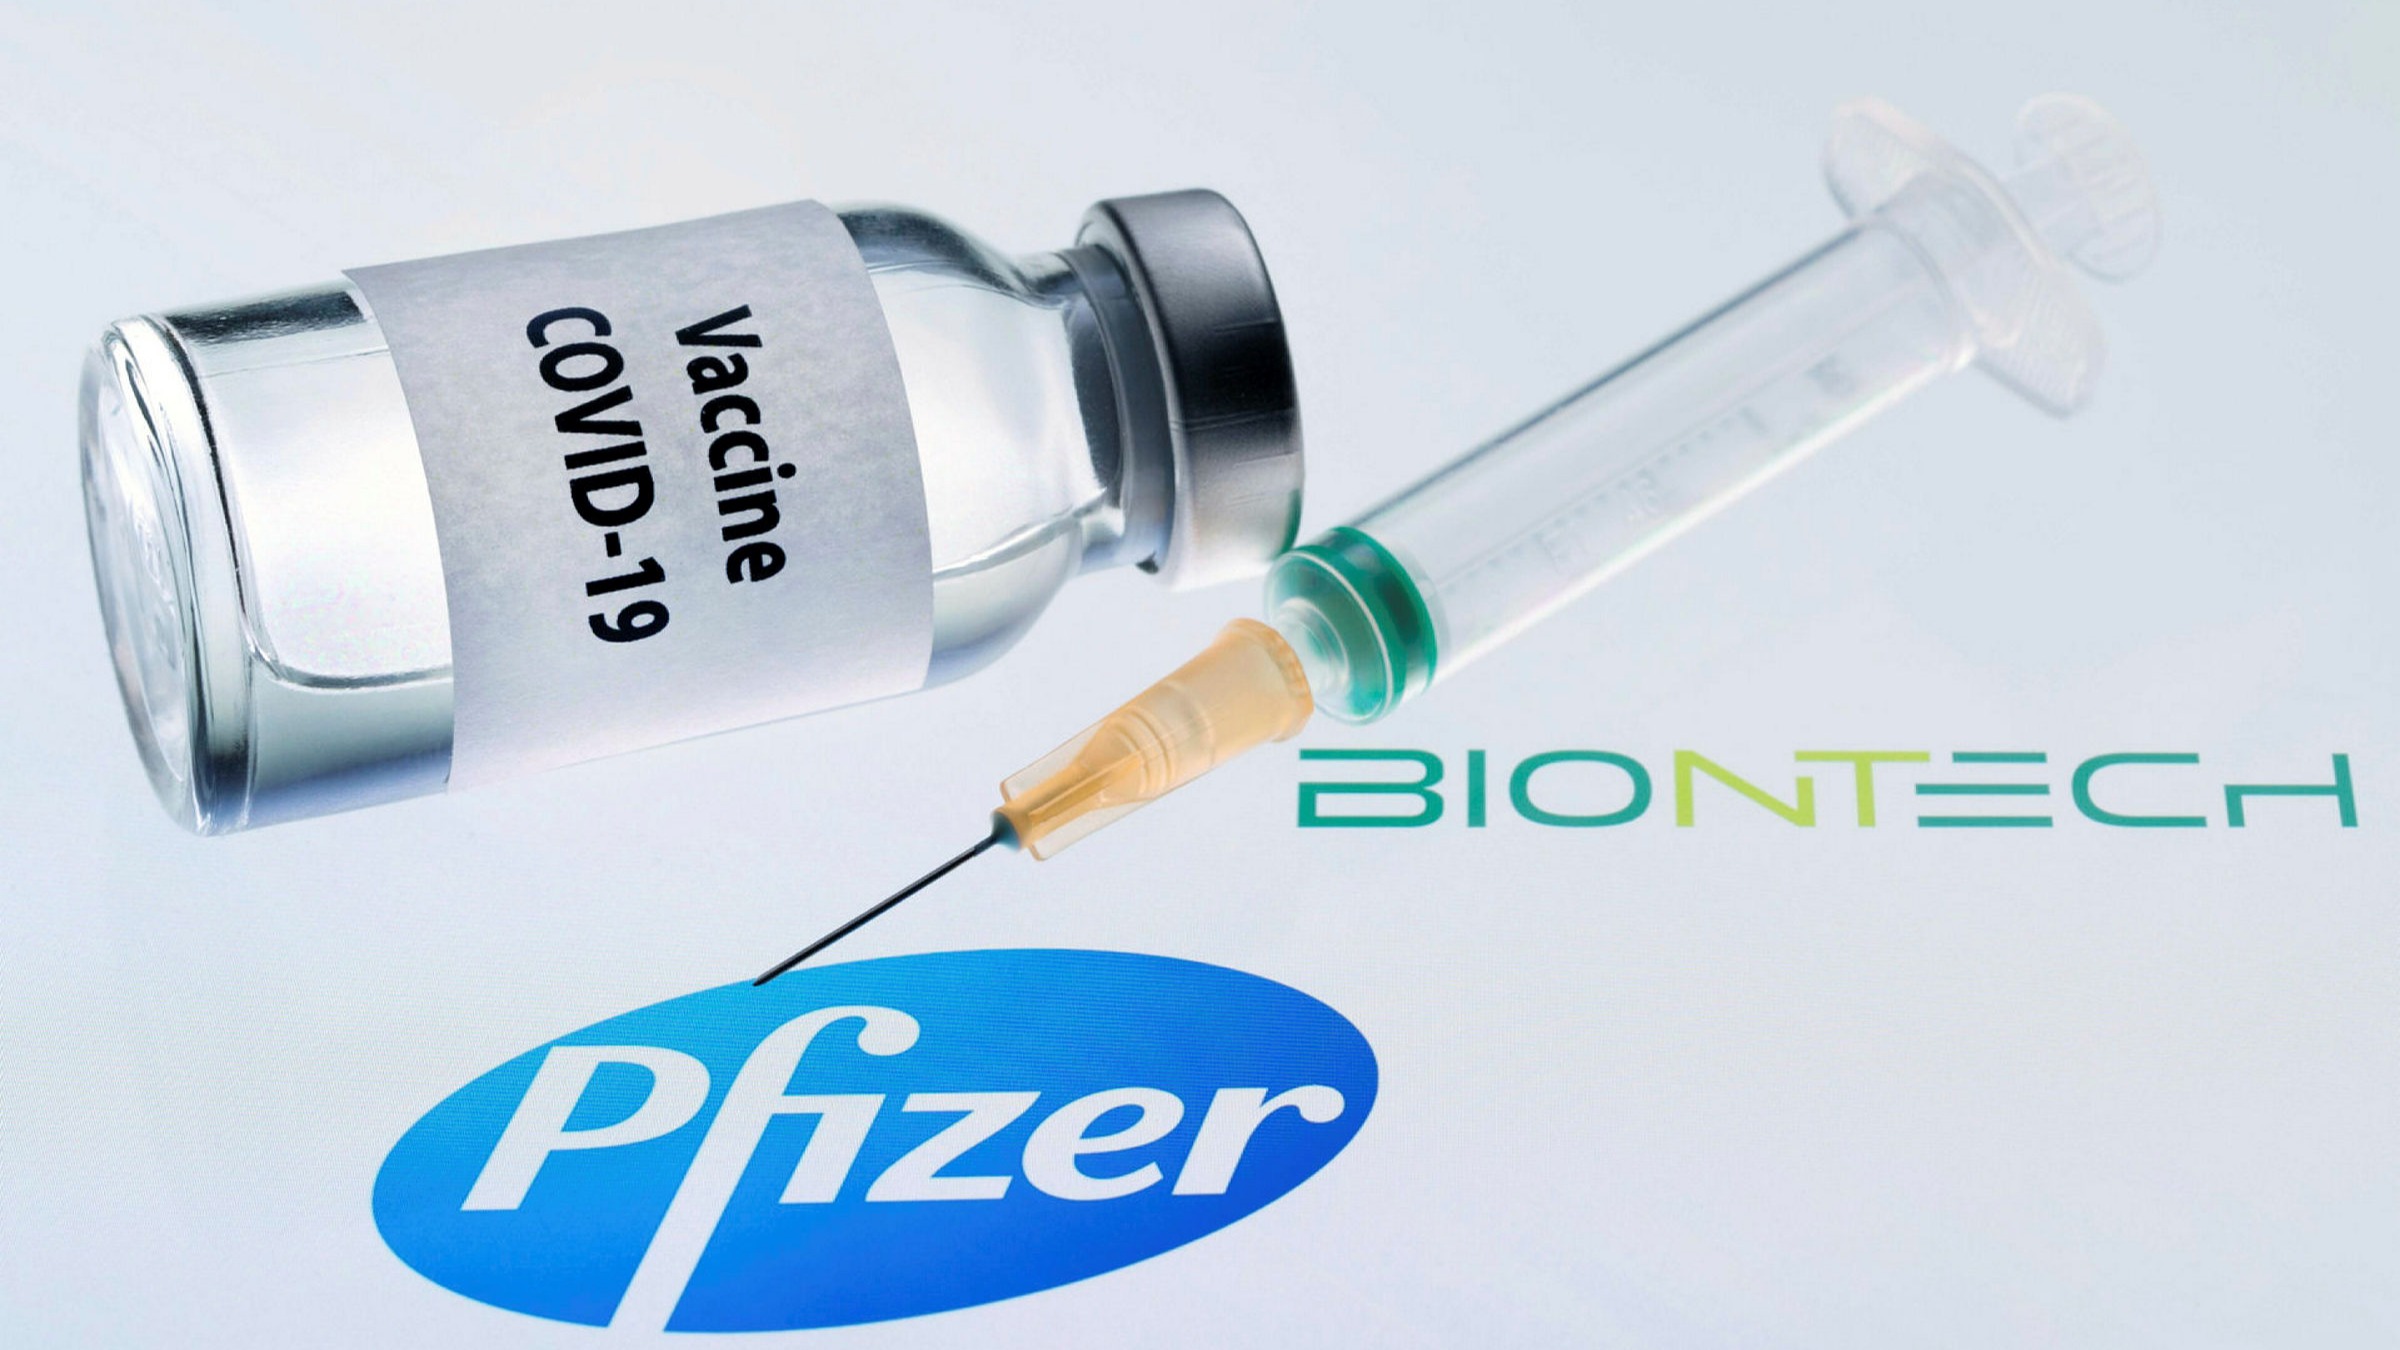 Nigeria lacks space to store Pfizer covid-19 vaccine, says NIMR